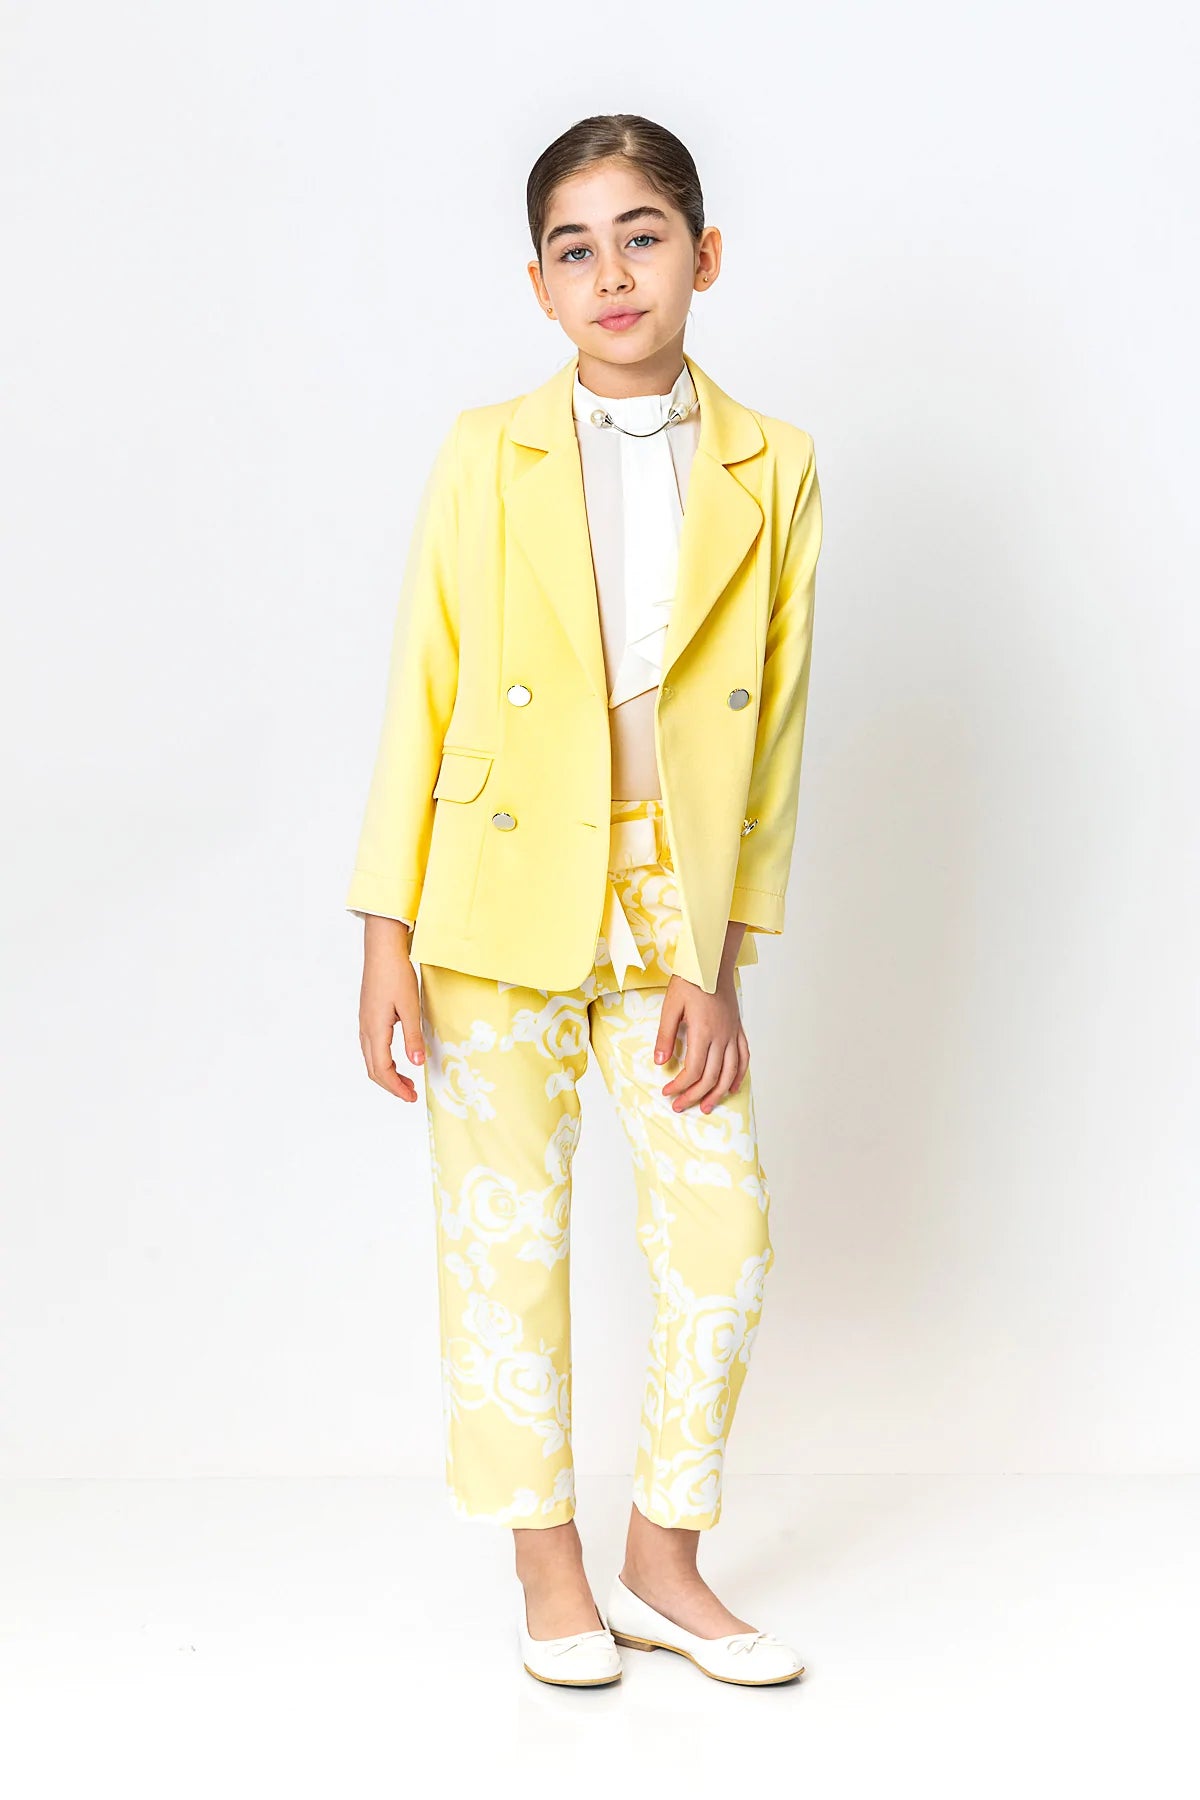 Puntoco Womens Business Suit Clearance,Women'S Long Sleeve Solid Suit Pants  Elegant Business Suit Sets Yellow 12(XXL) - Walmart.com